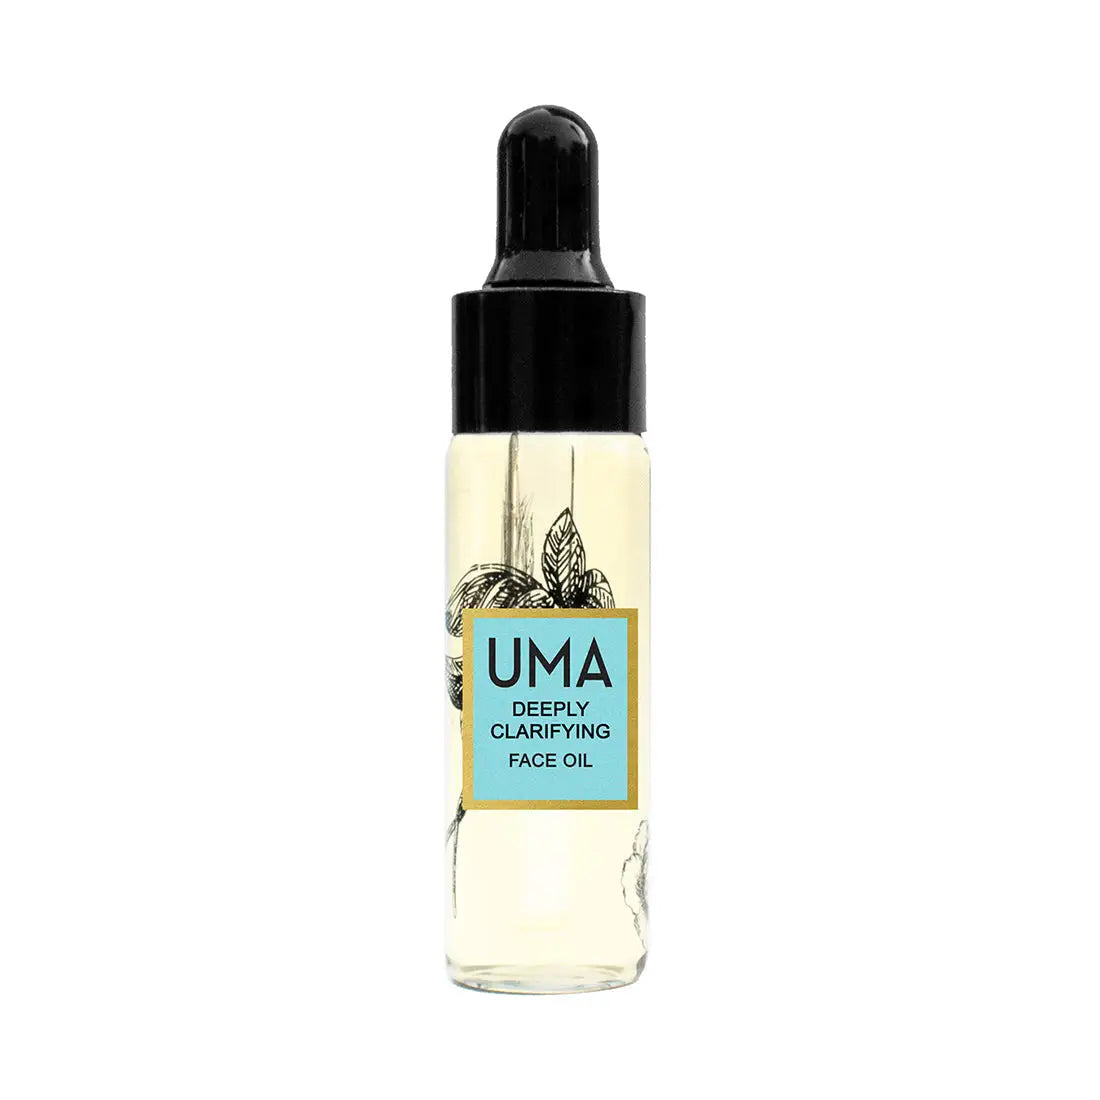 UMA Deeply Clarifying Face Oil 15ml - Free Shipping 